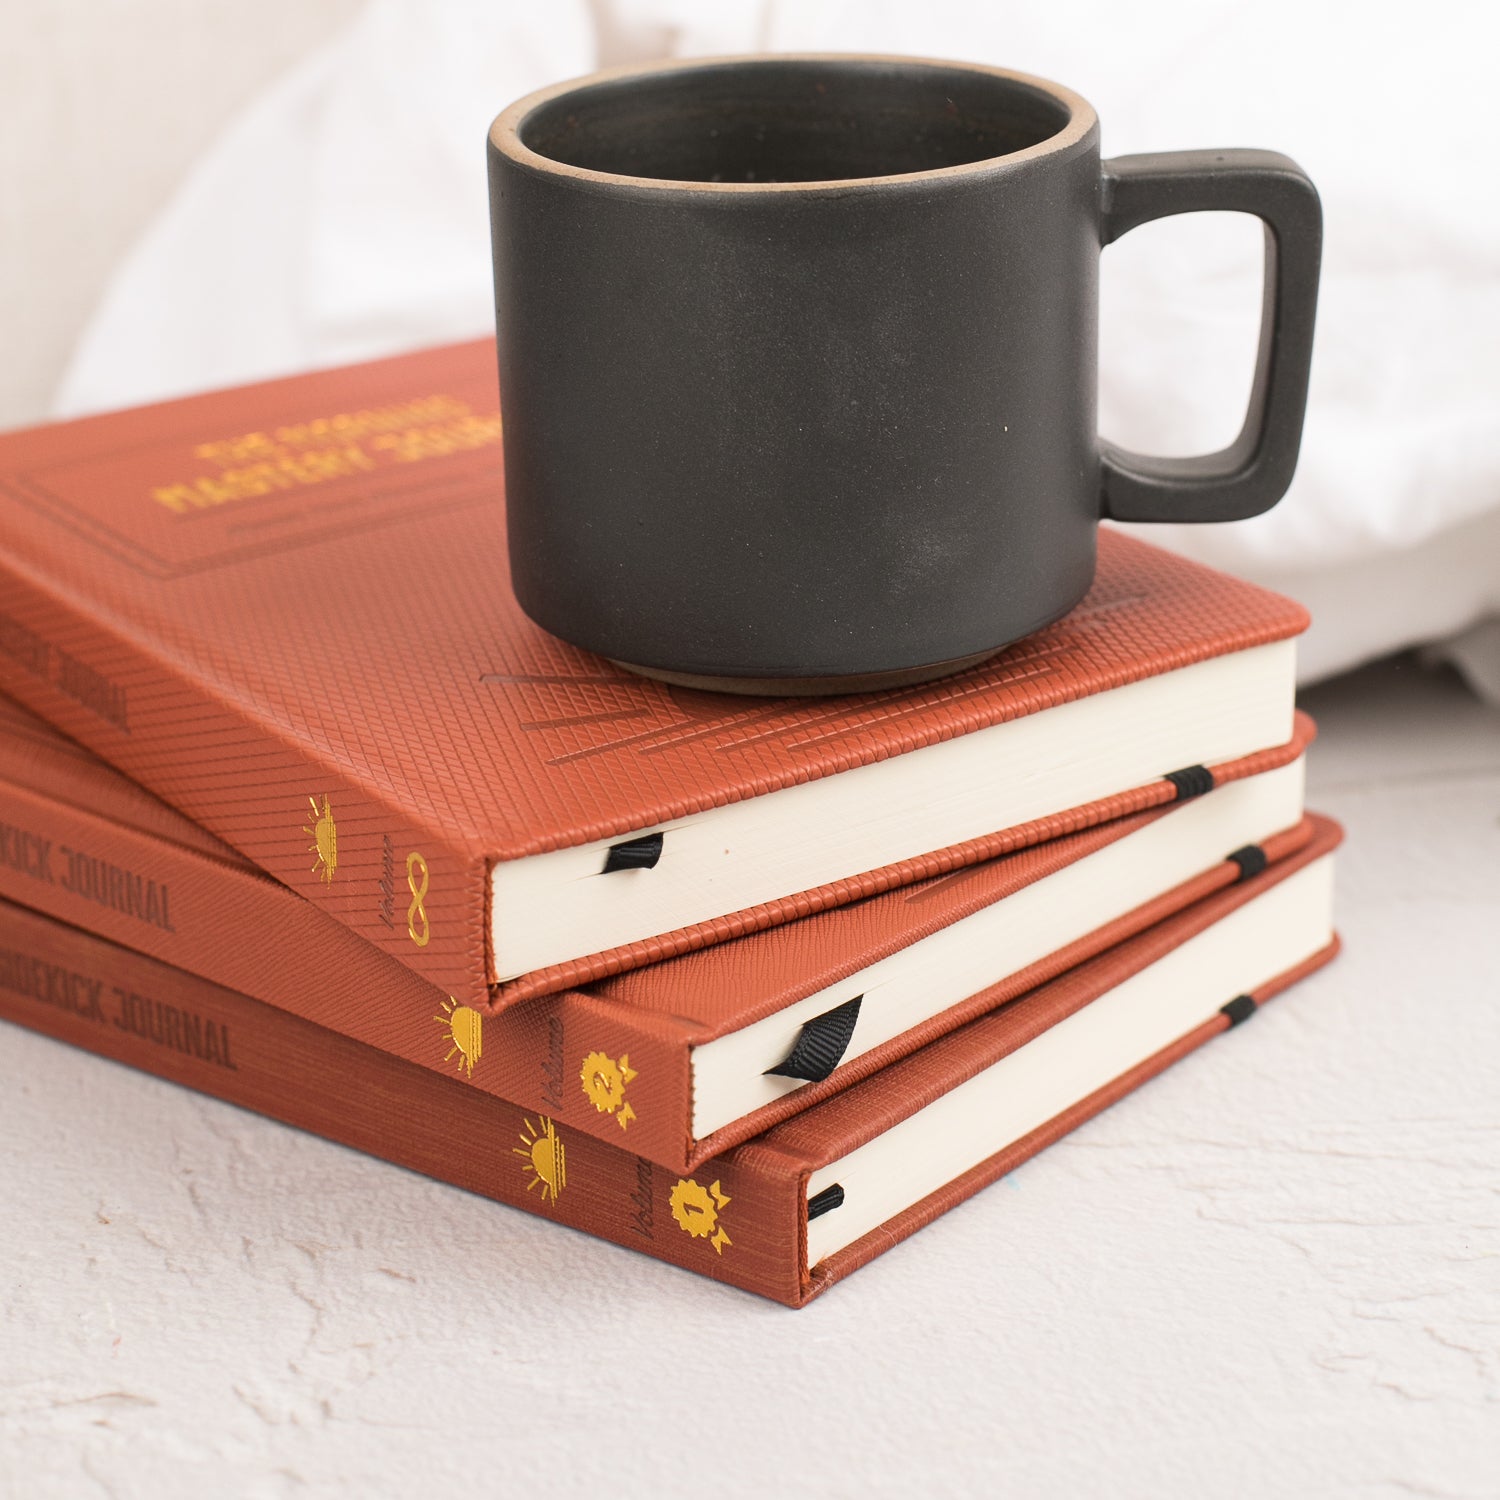 The Complete Morning Sidekick Journal Series (Volumes 1-4)